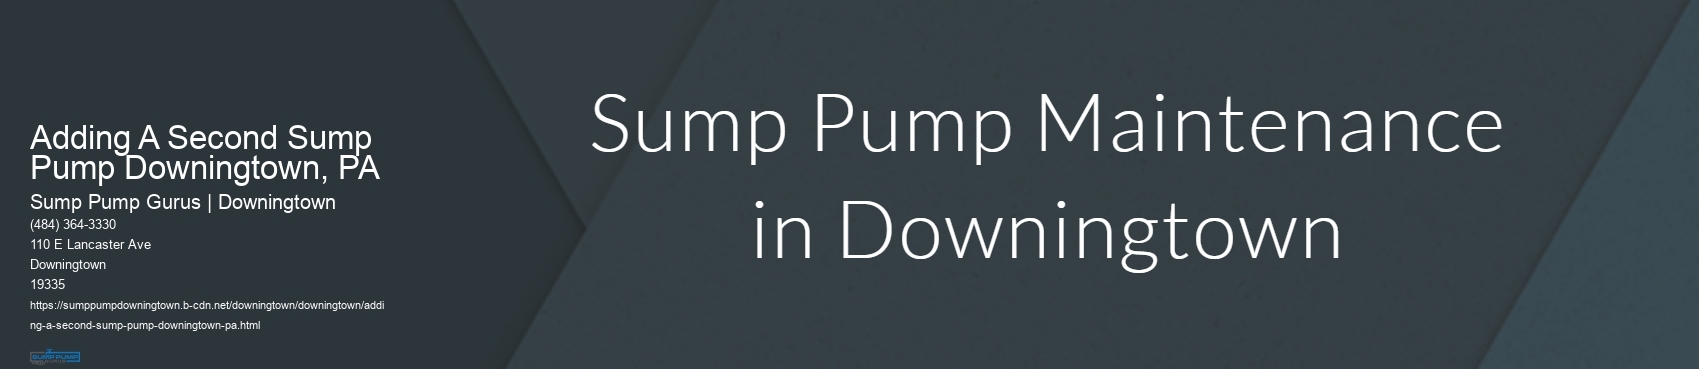 Adding A Second Sump Pump Downingtown, PA